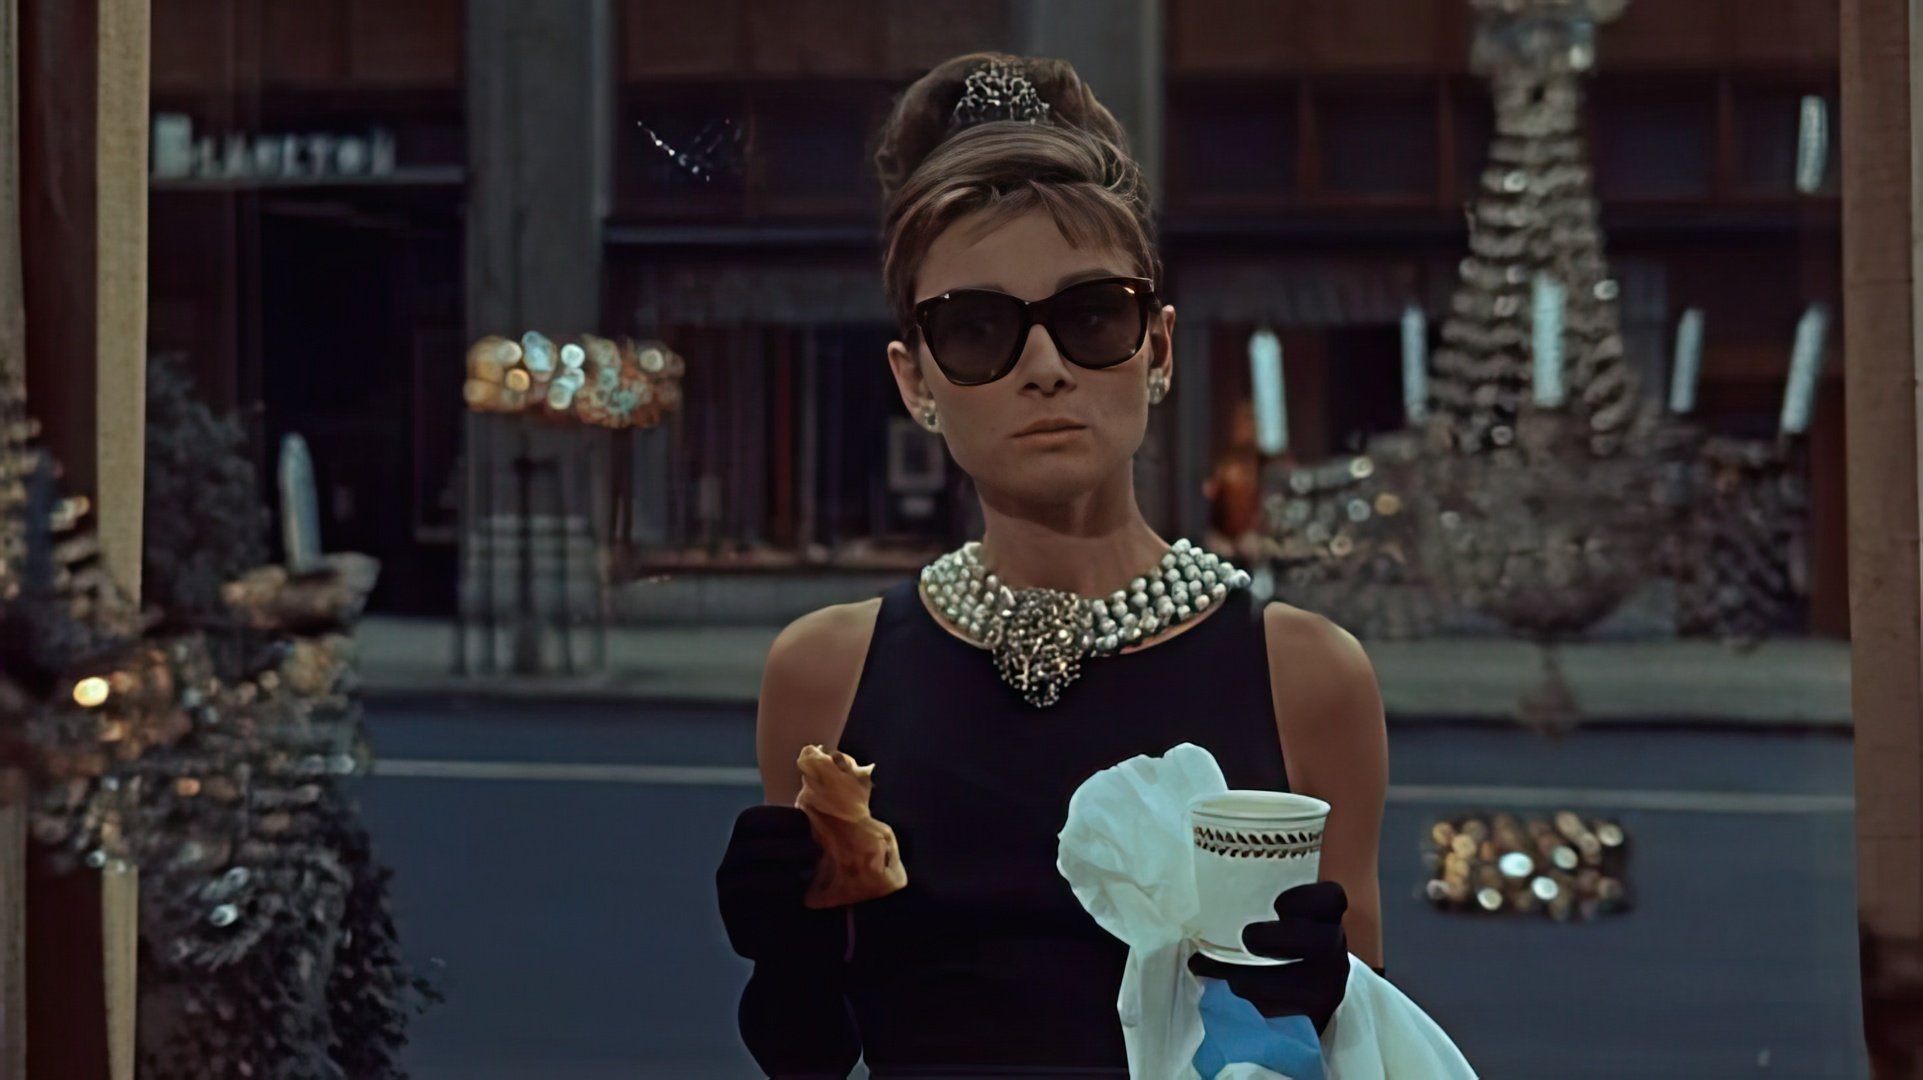 Audrey Hepburn in 'Breakfast at Tiffany's'